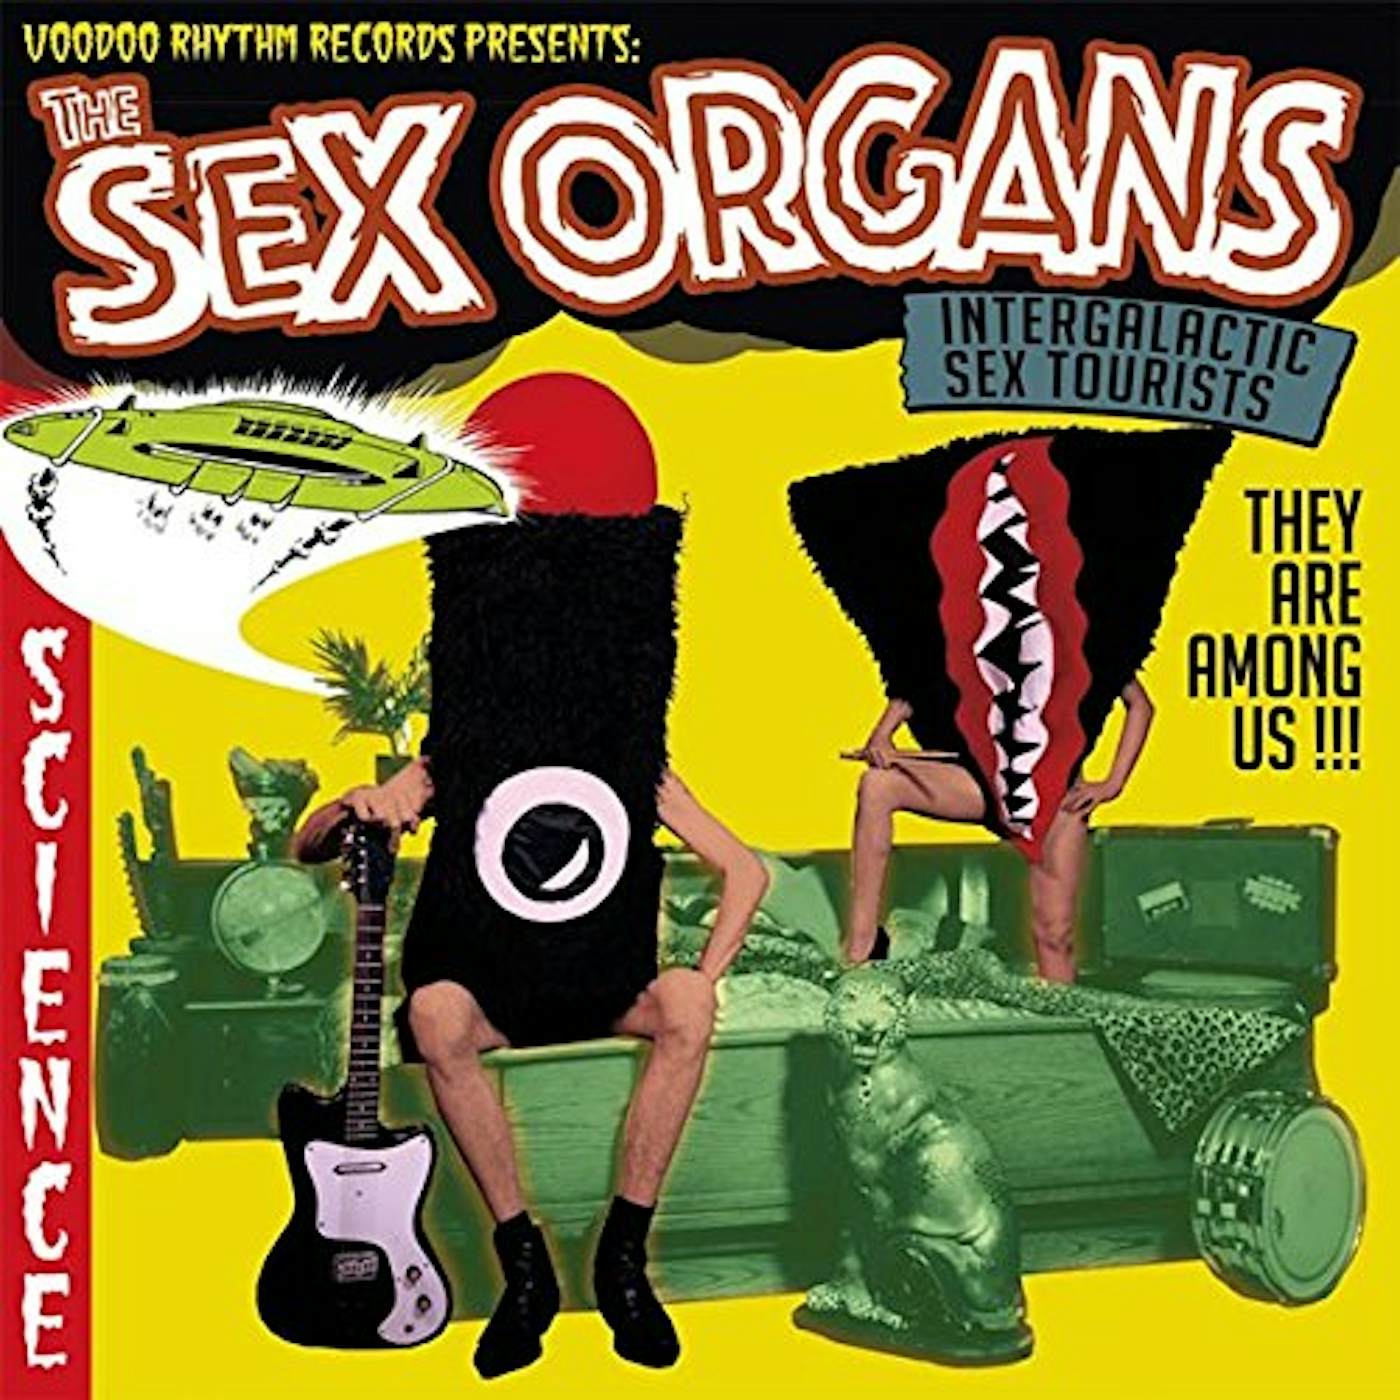 The Sex Organs INTERGALACTIC SEX TOURIST Vinyl Record